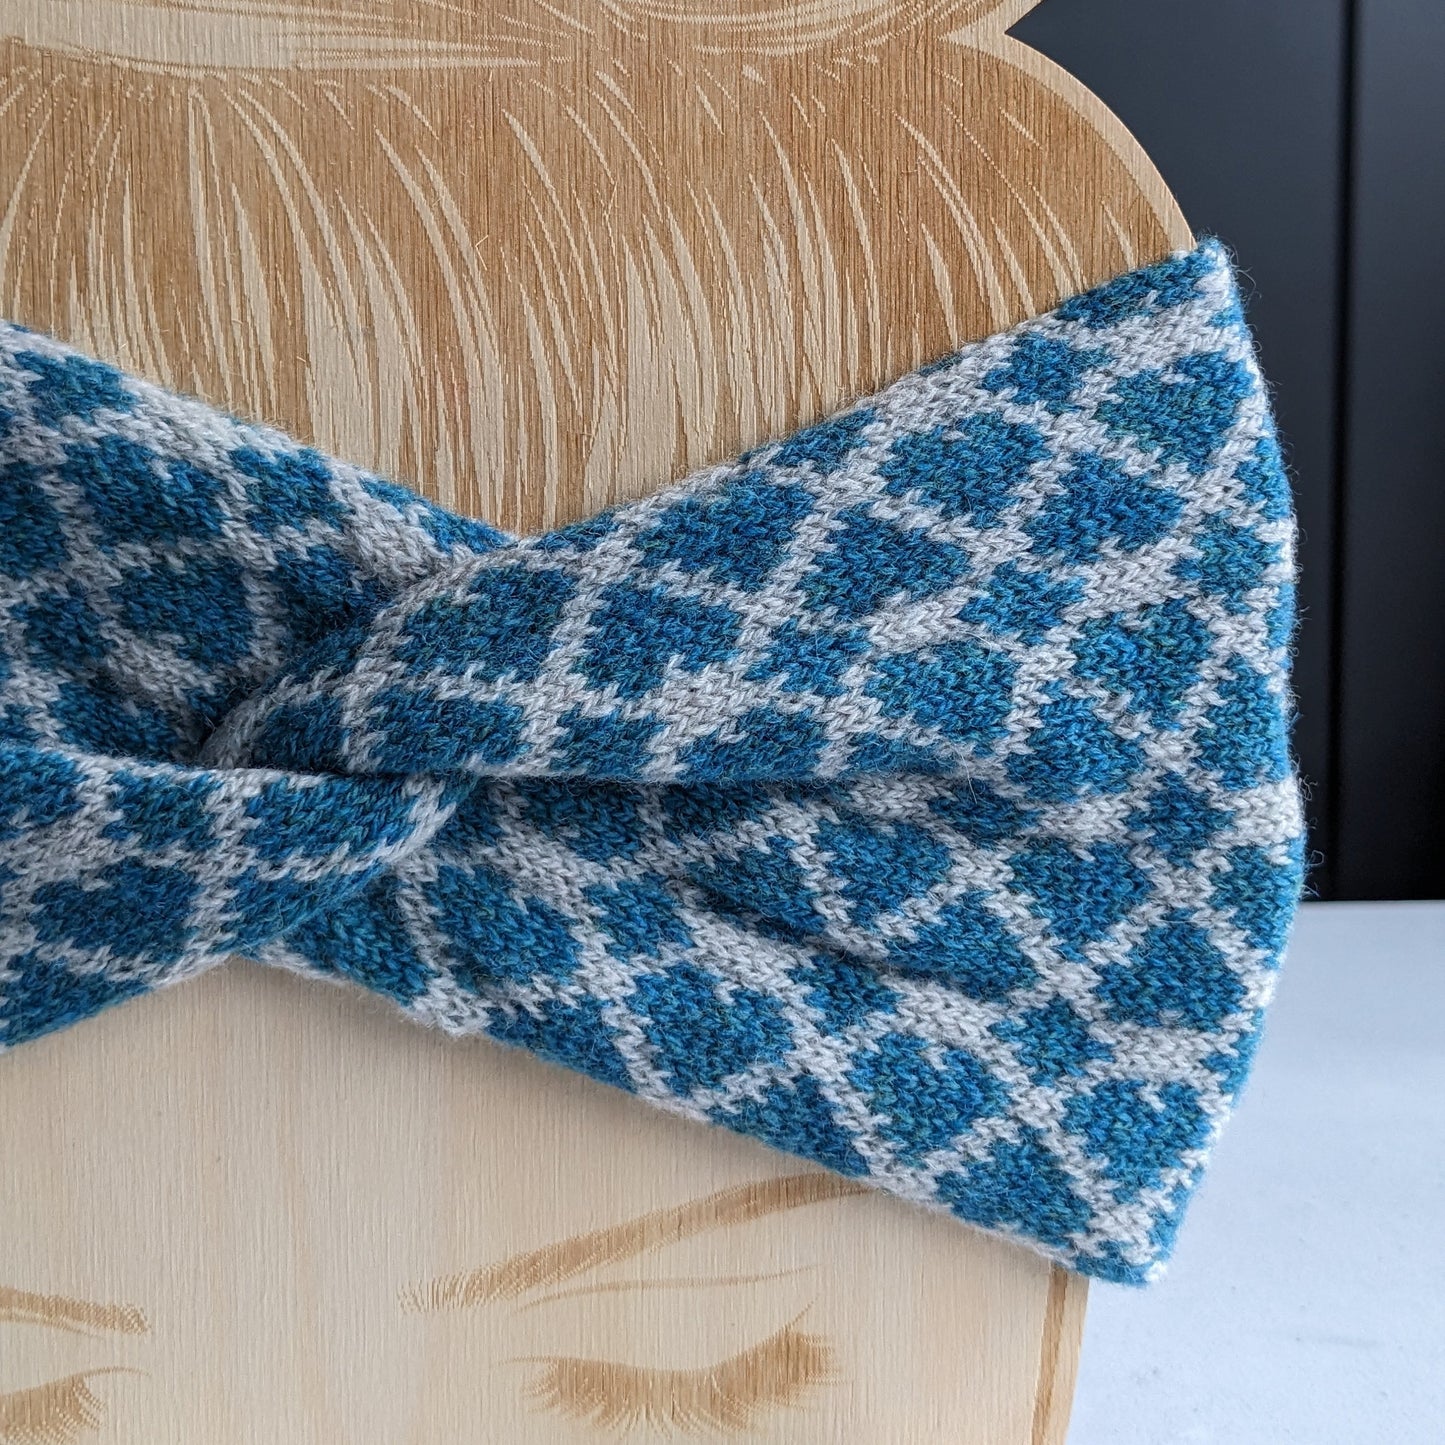 Merino wool ear warmer knitted headband pale grey with blue hearts